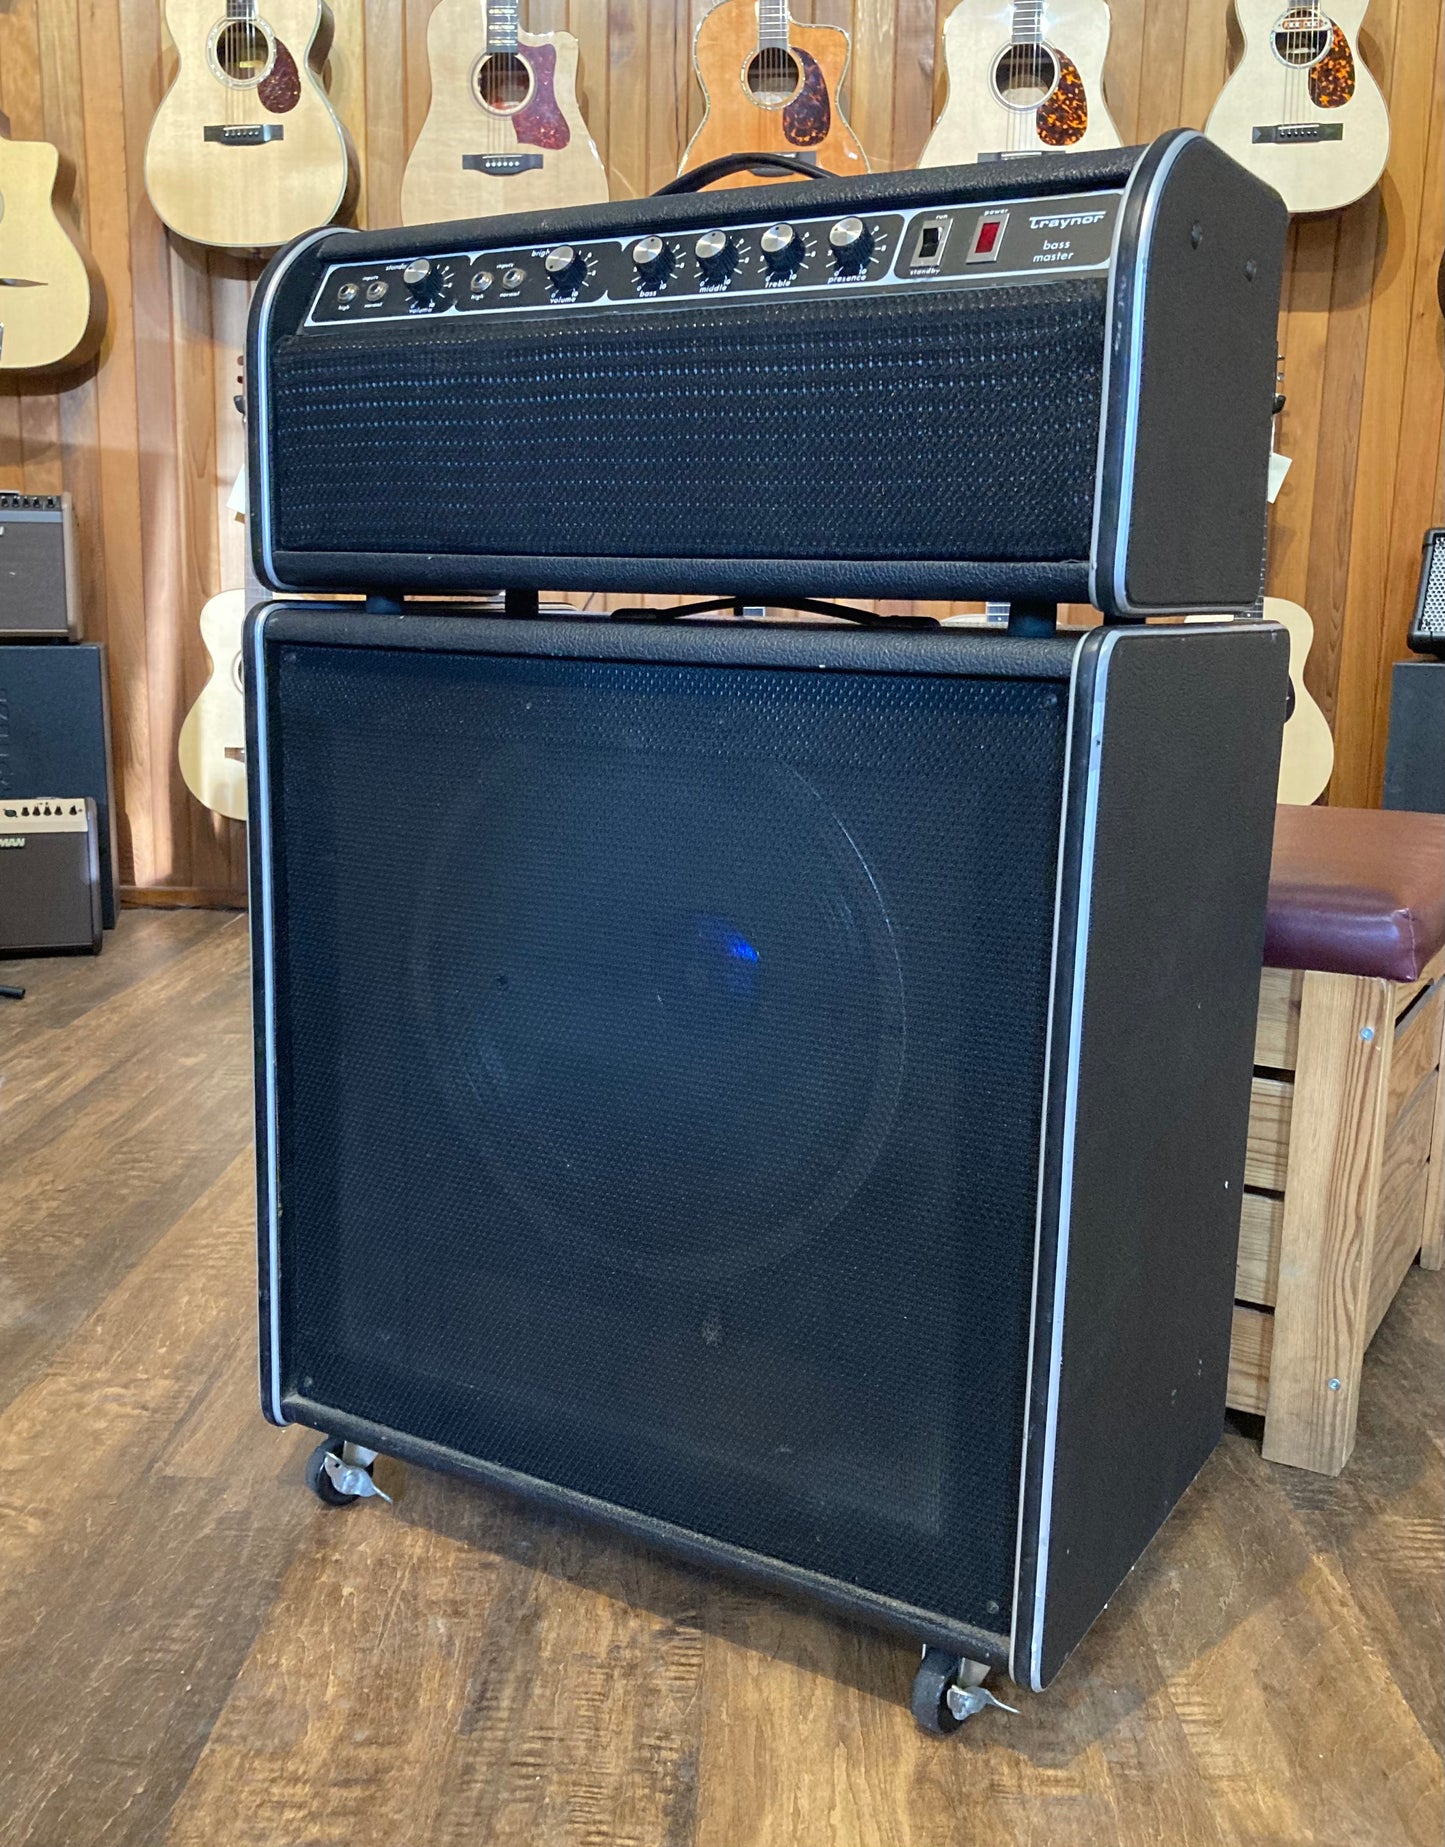 Traynor YBA-1 Guitar Amp w/YS-15P Speaker Cabinet (1979)